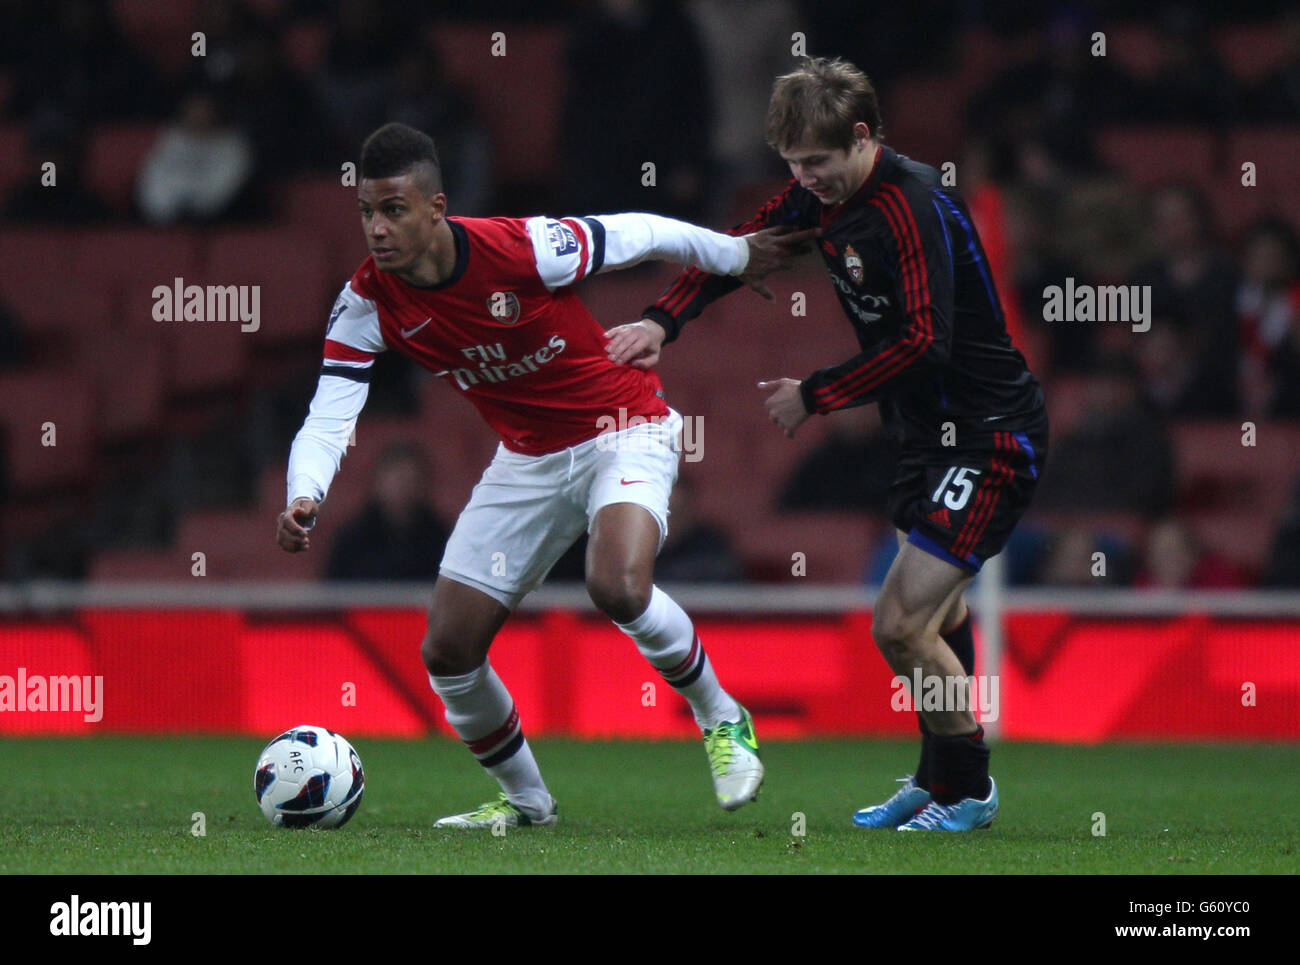 Arsenal's Martin Angha (left) battles for possession of the ball with PFC CSKA's Dmitry Efremov (right) Stock Photo